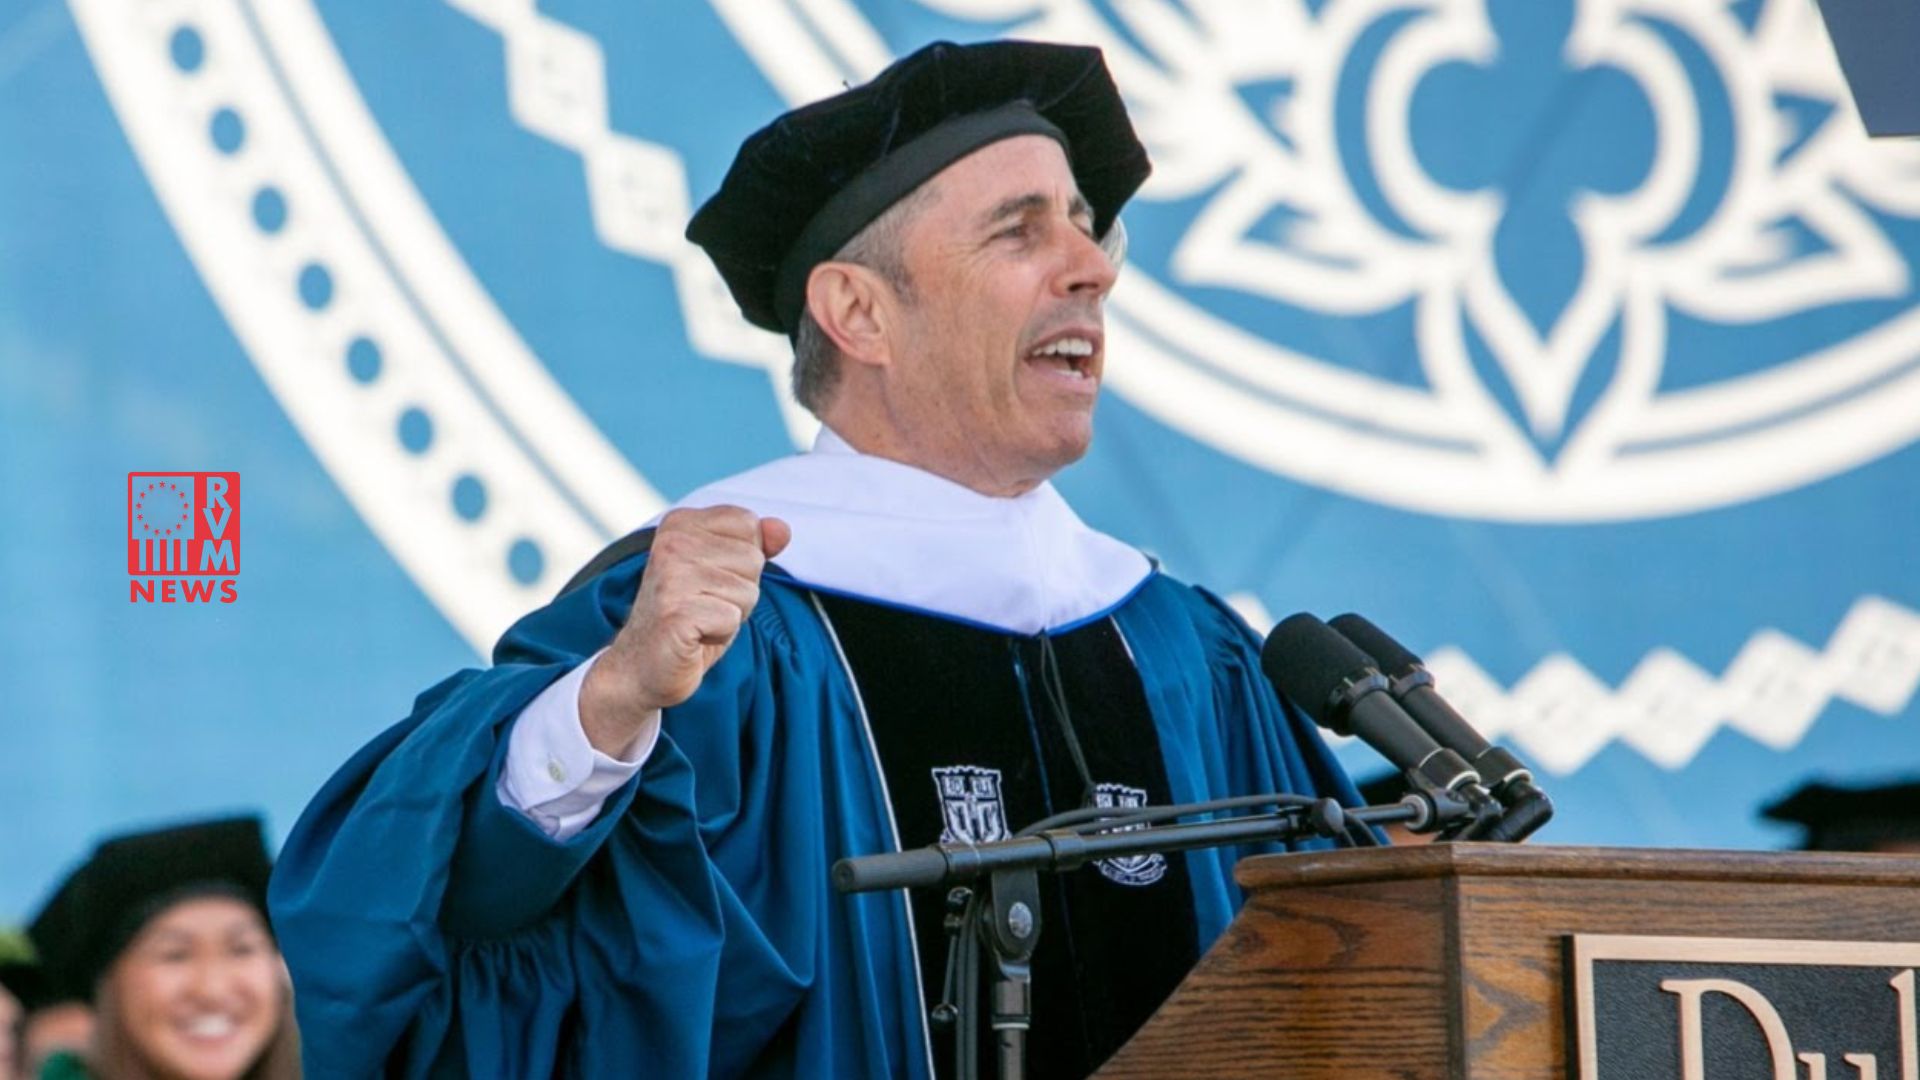 College brats interrupt Duke's commencement during Jerry Seinfeld's speech [VIDEOS]